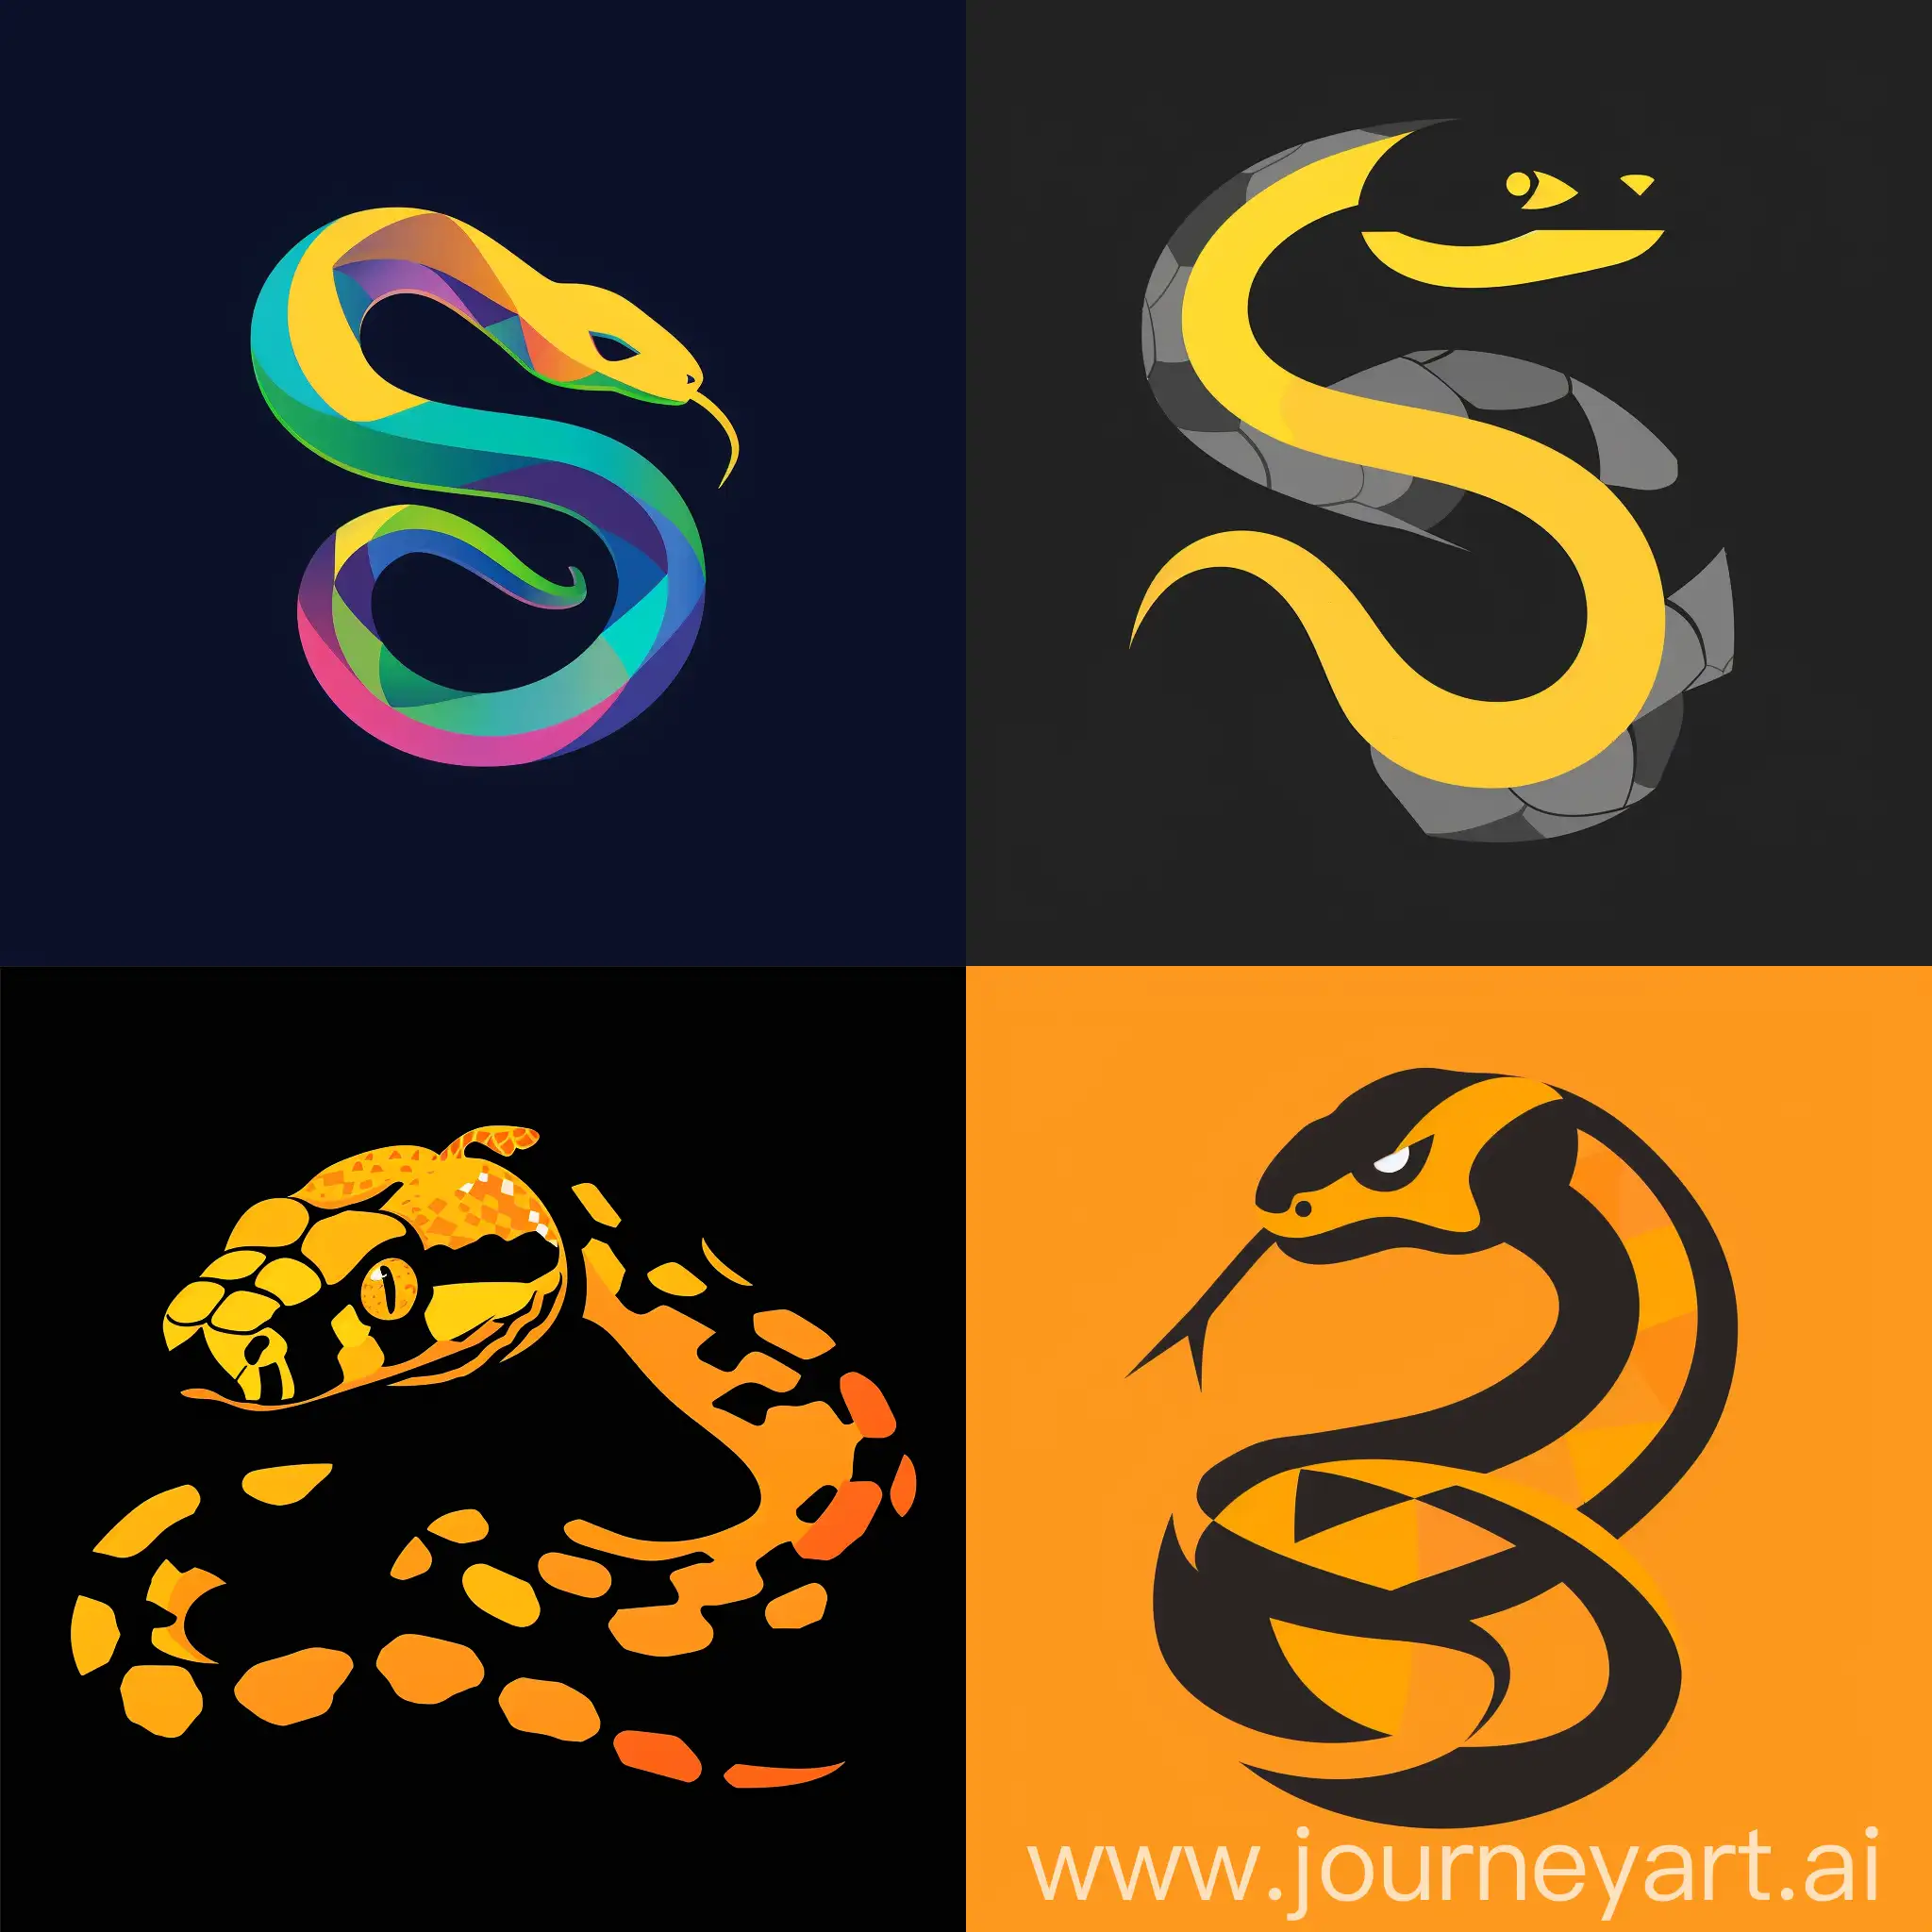 Python-Programming-Language-YouTube-Channel-Logo-SPython-with-Stylized-Snake-as-S